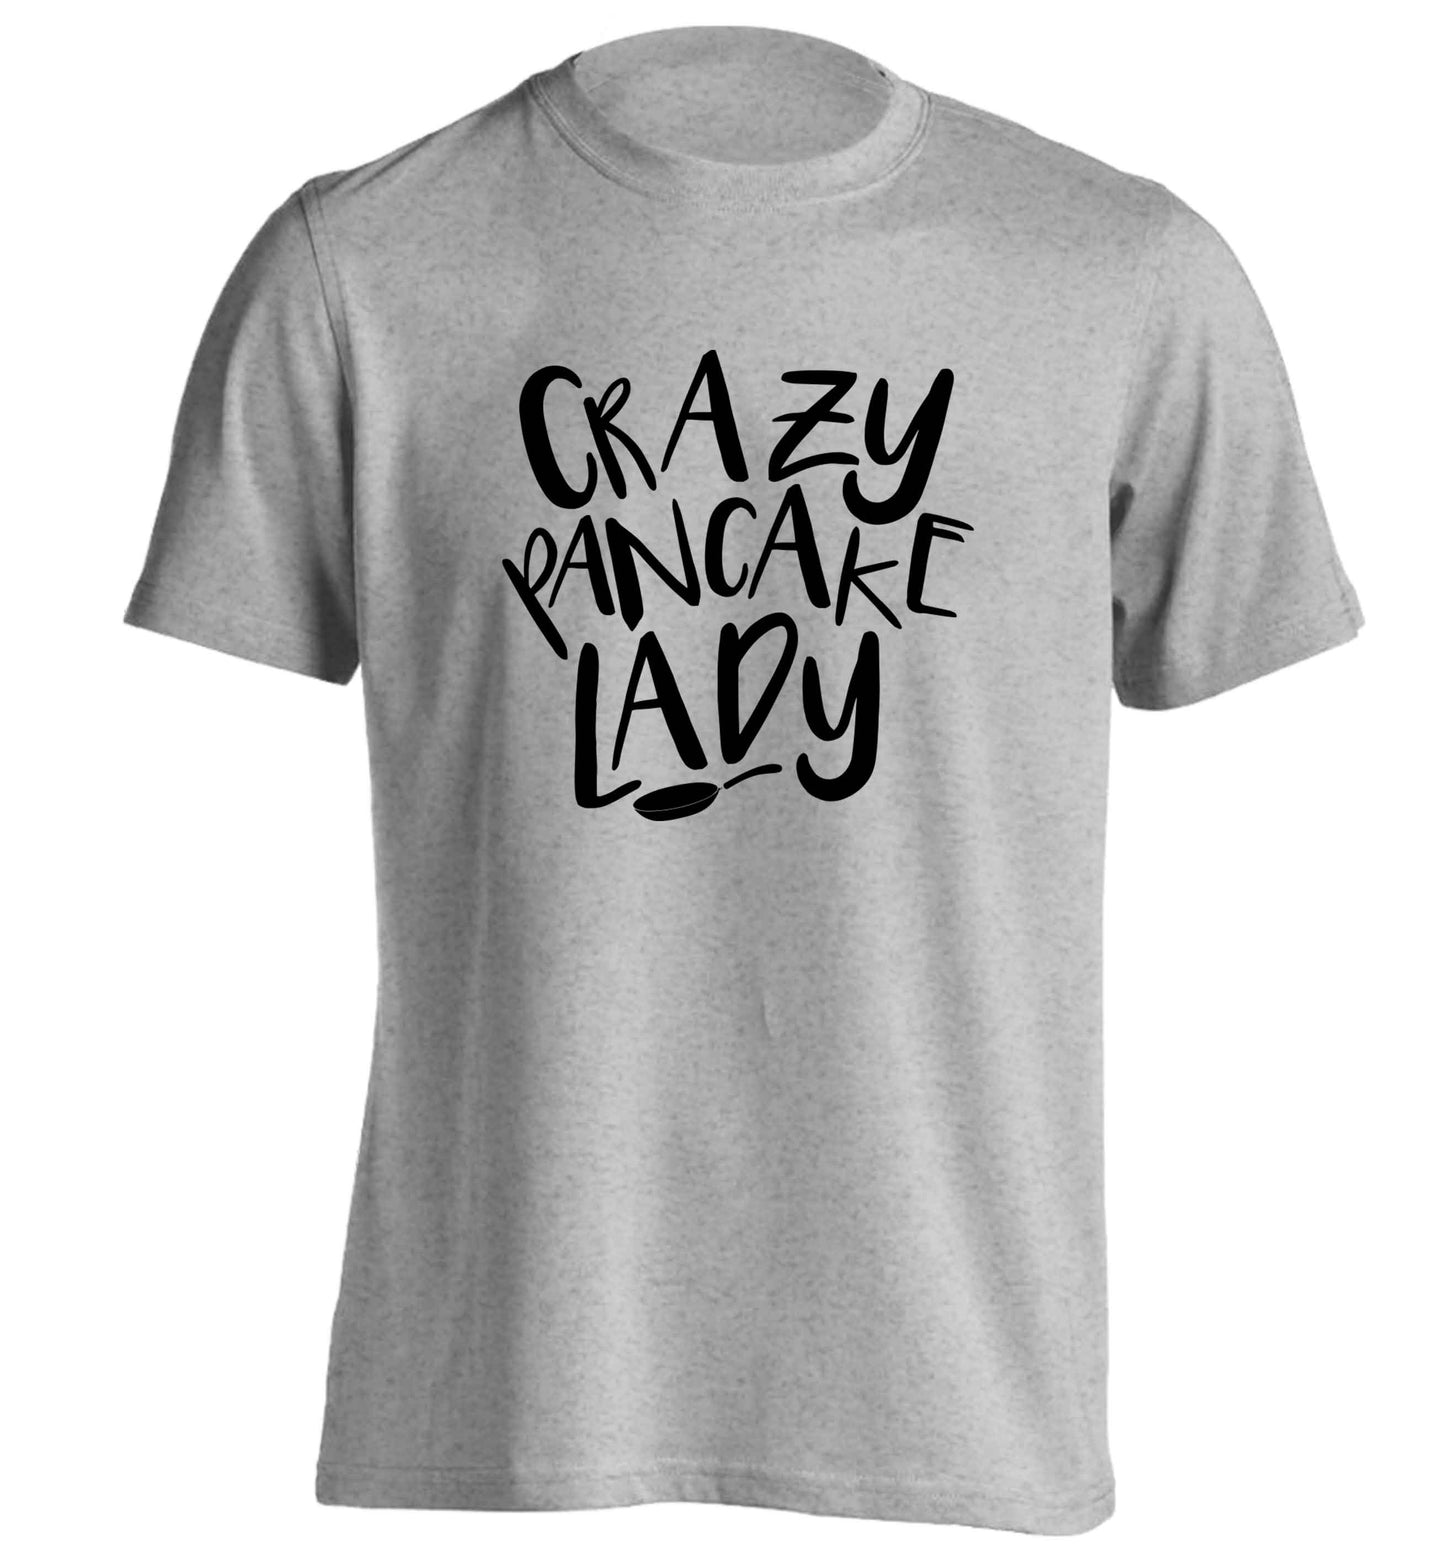 Crazy pancake lady adults unisex grey Tshirt 2XL